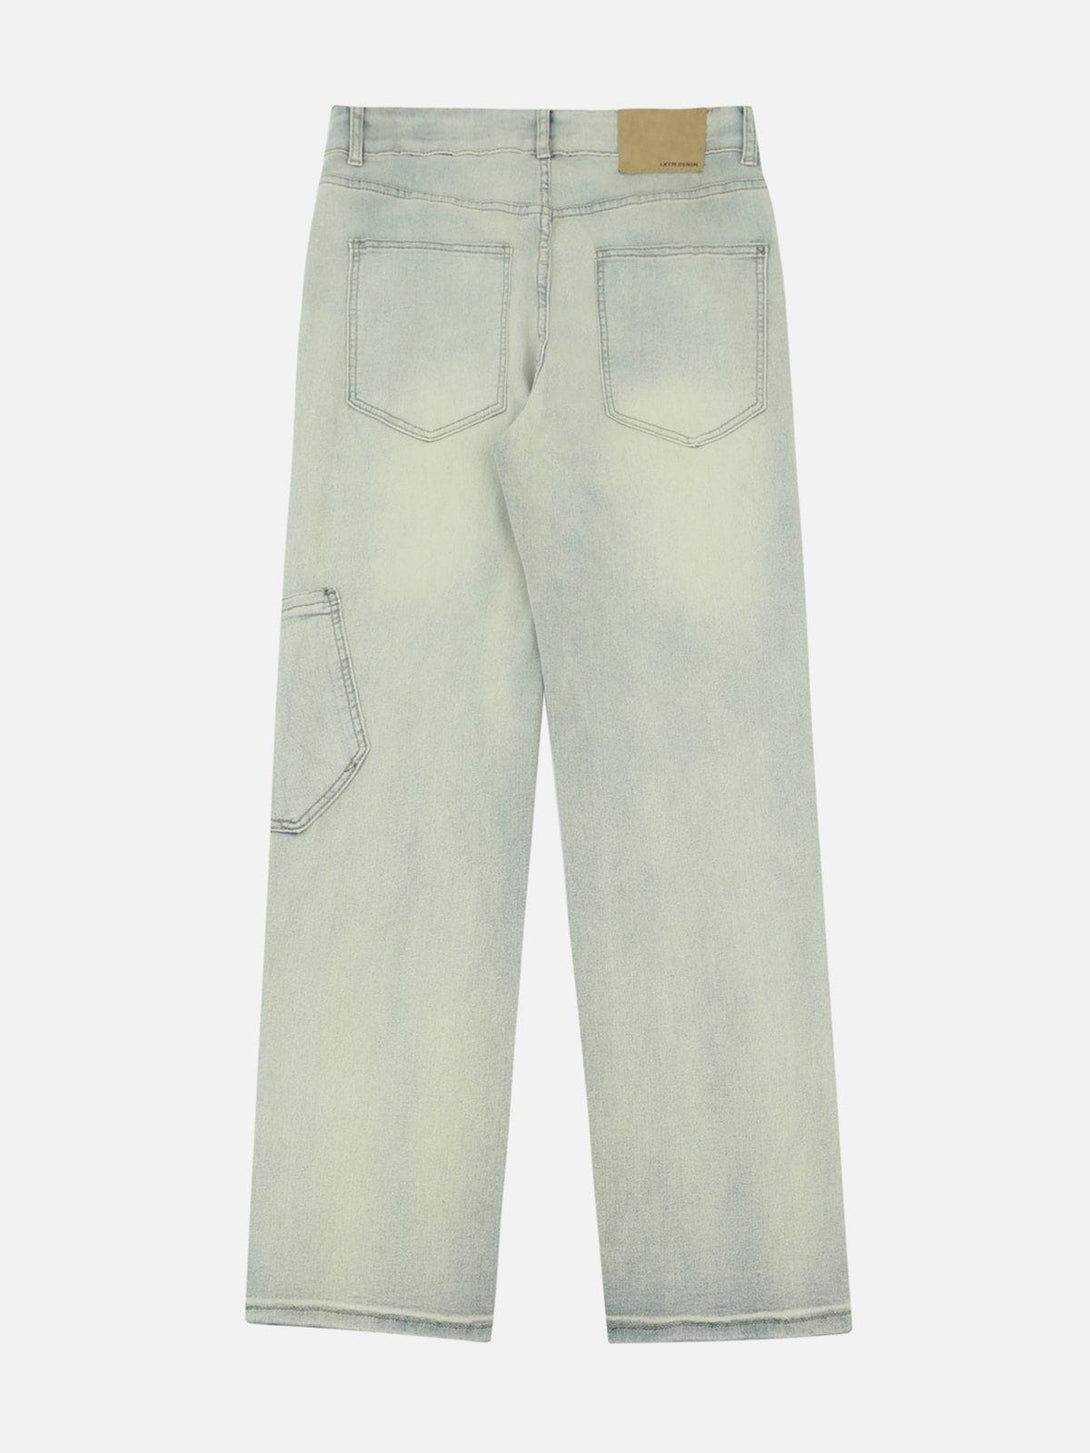 AlanBalen® - Vintage Washed ZIP UP Jeans AlanBalen